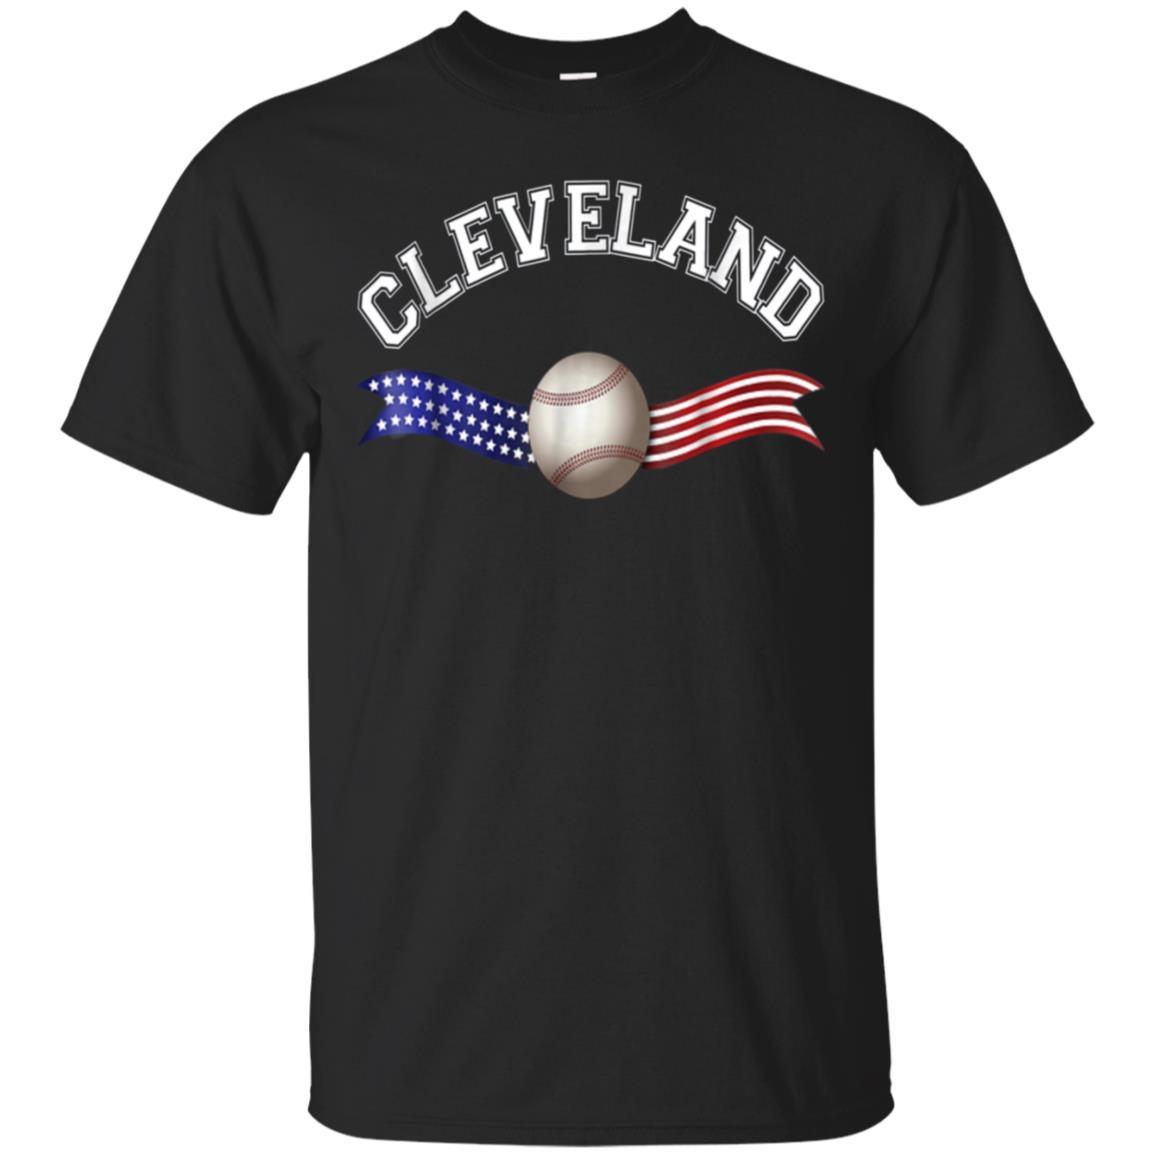  Cleveland Ohio Baseball Heart Cle T Shirt